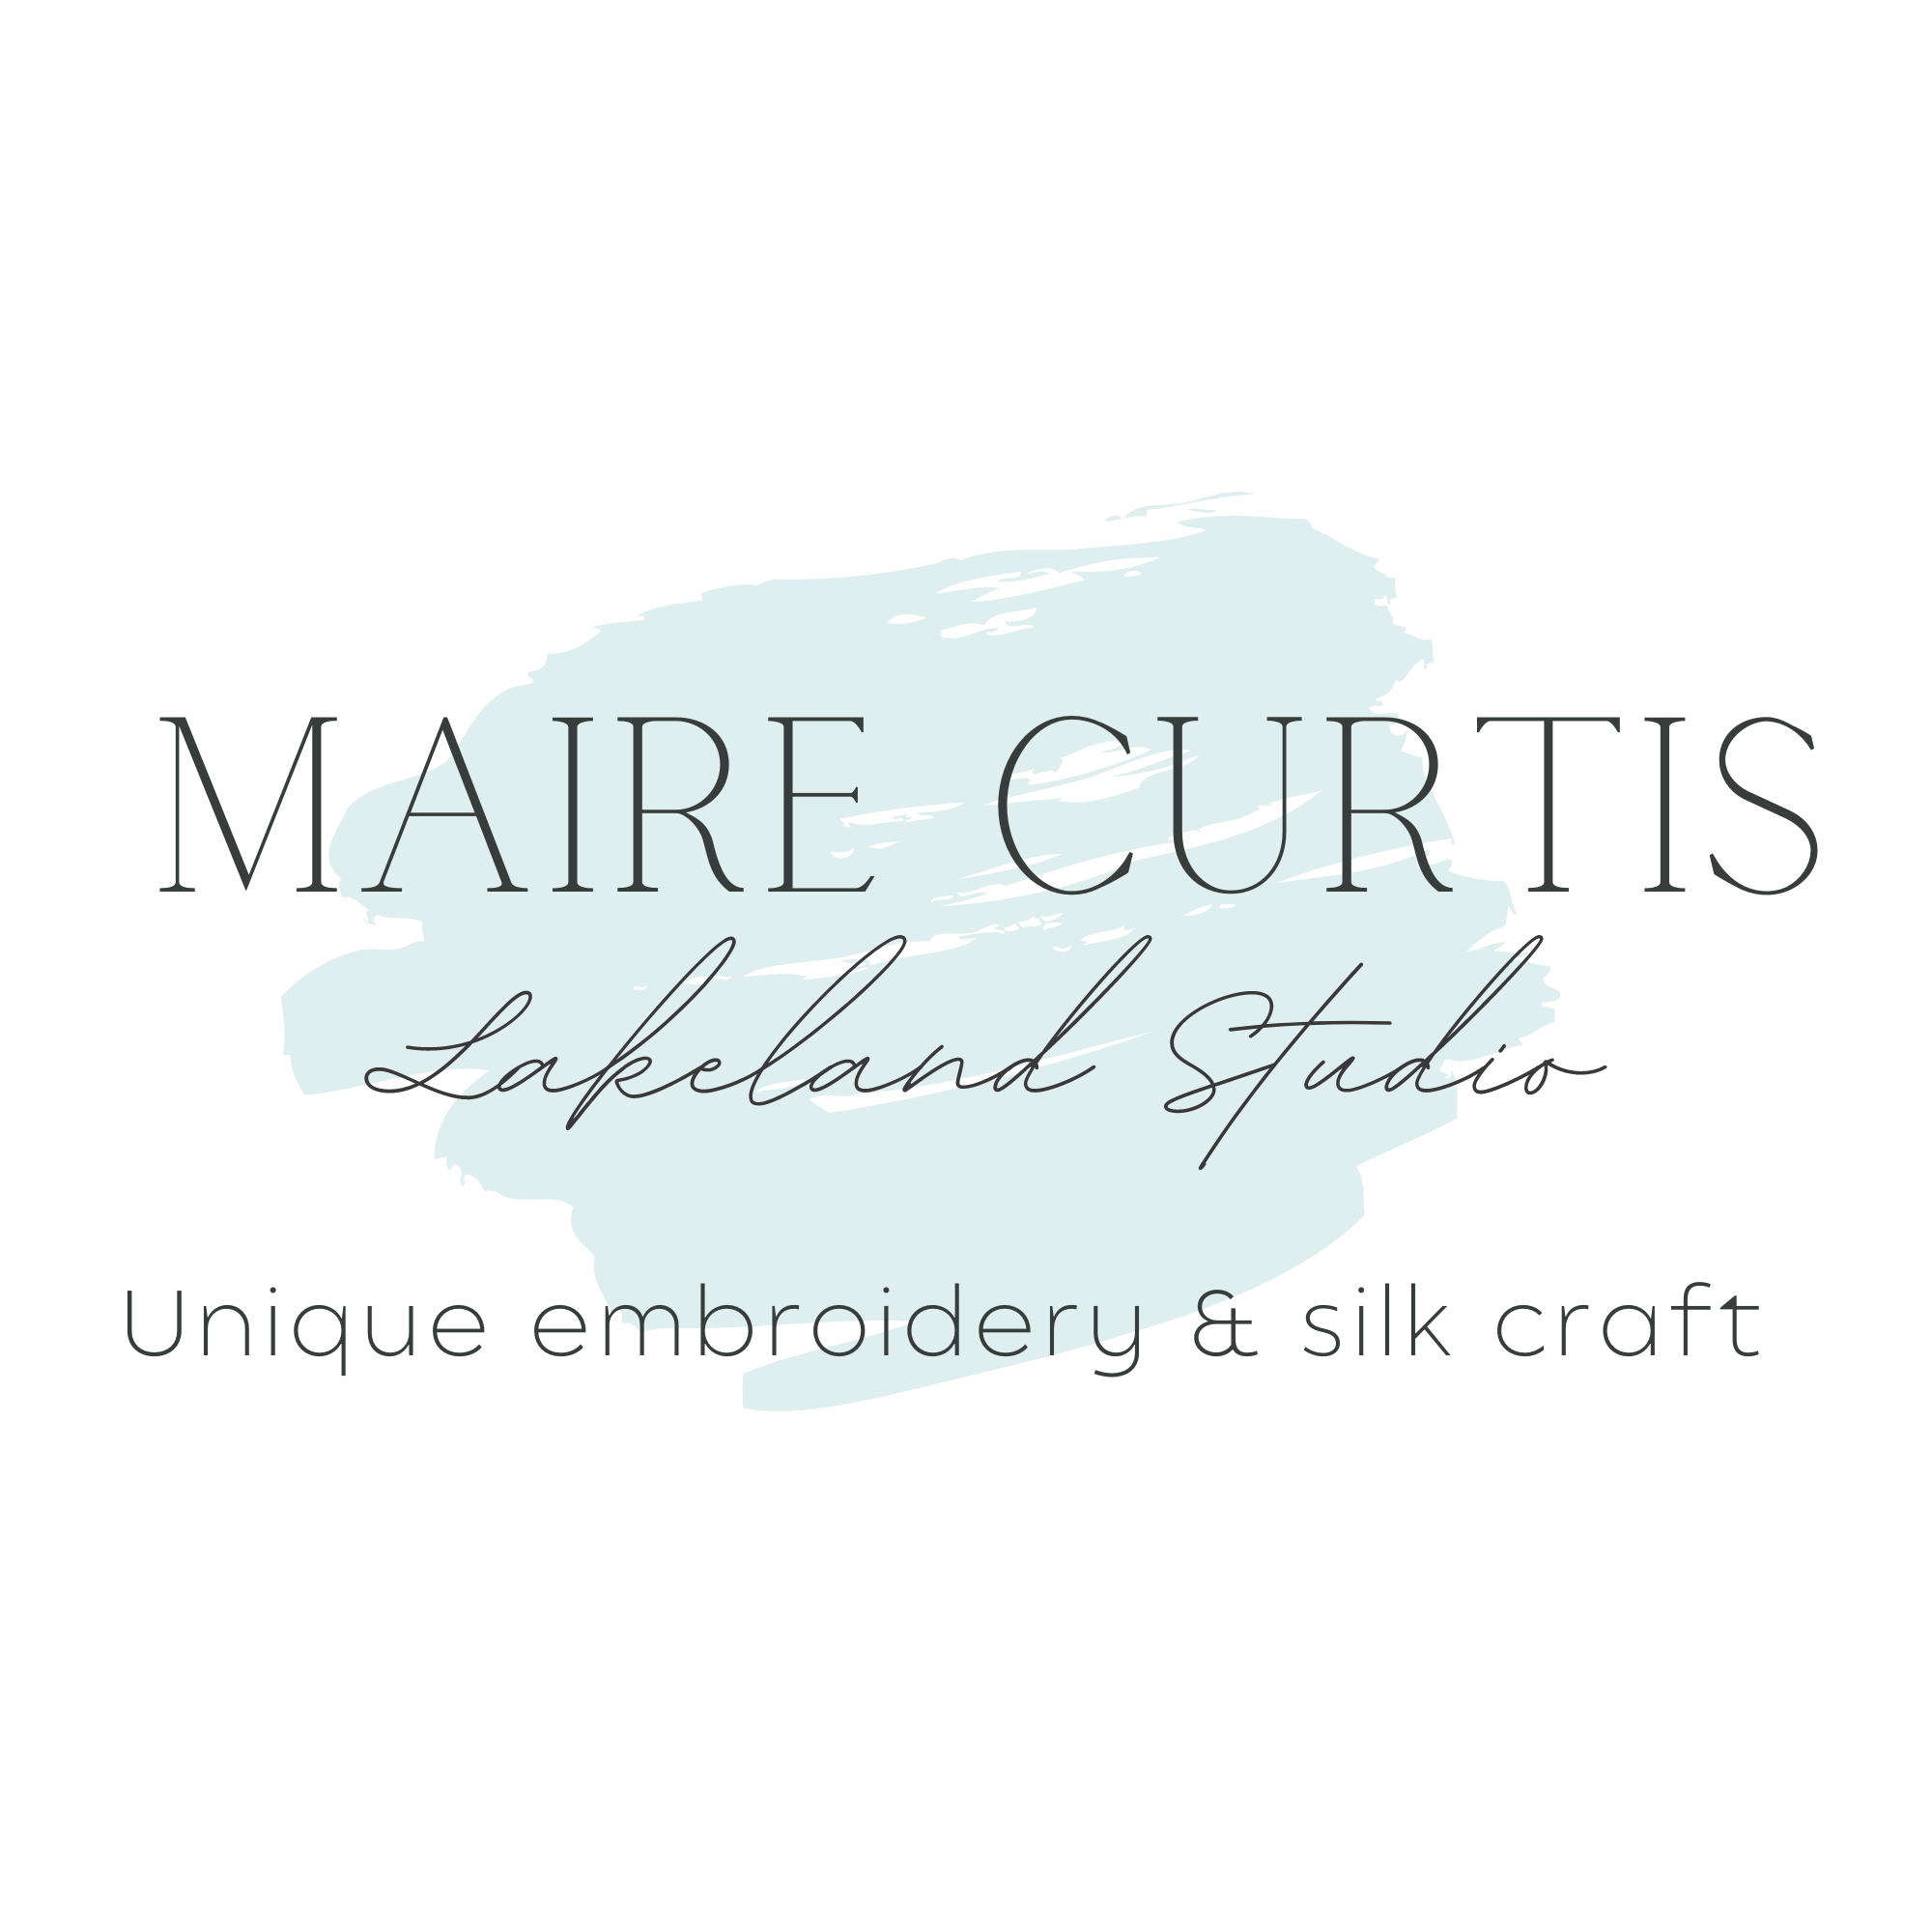 Maire Curtis Lakeland Studio logo